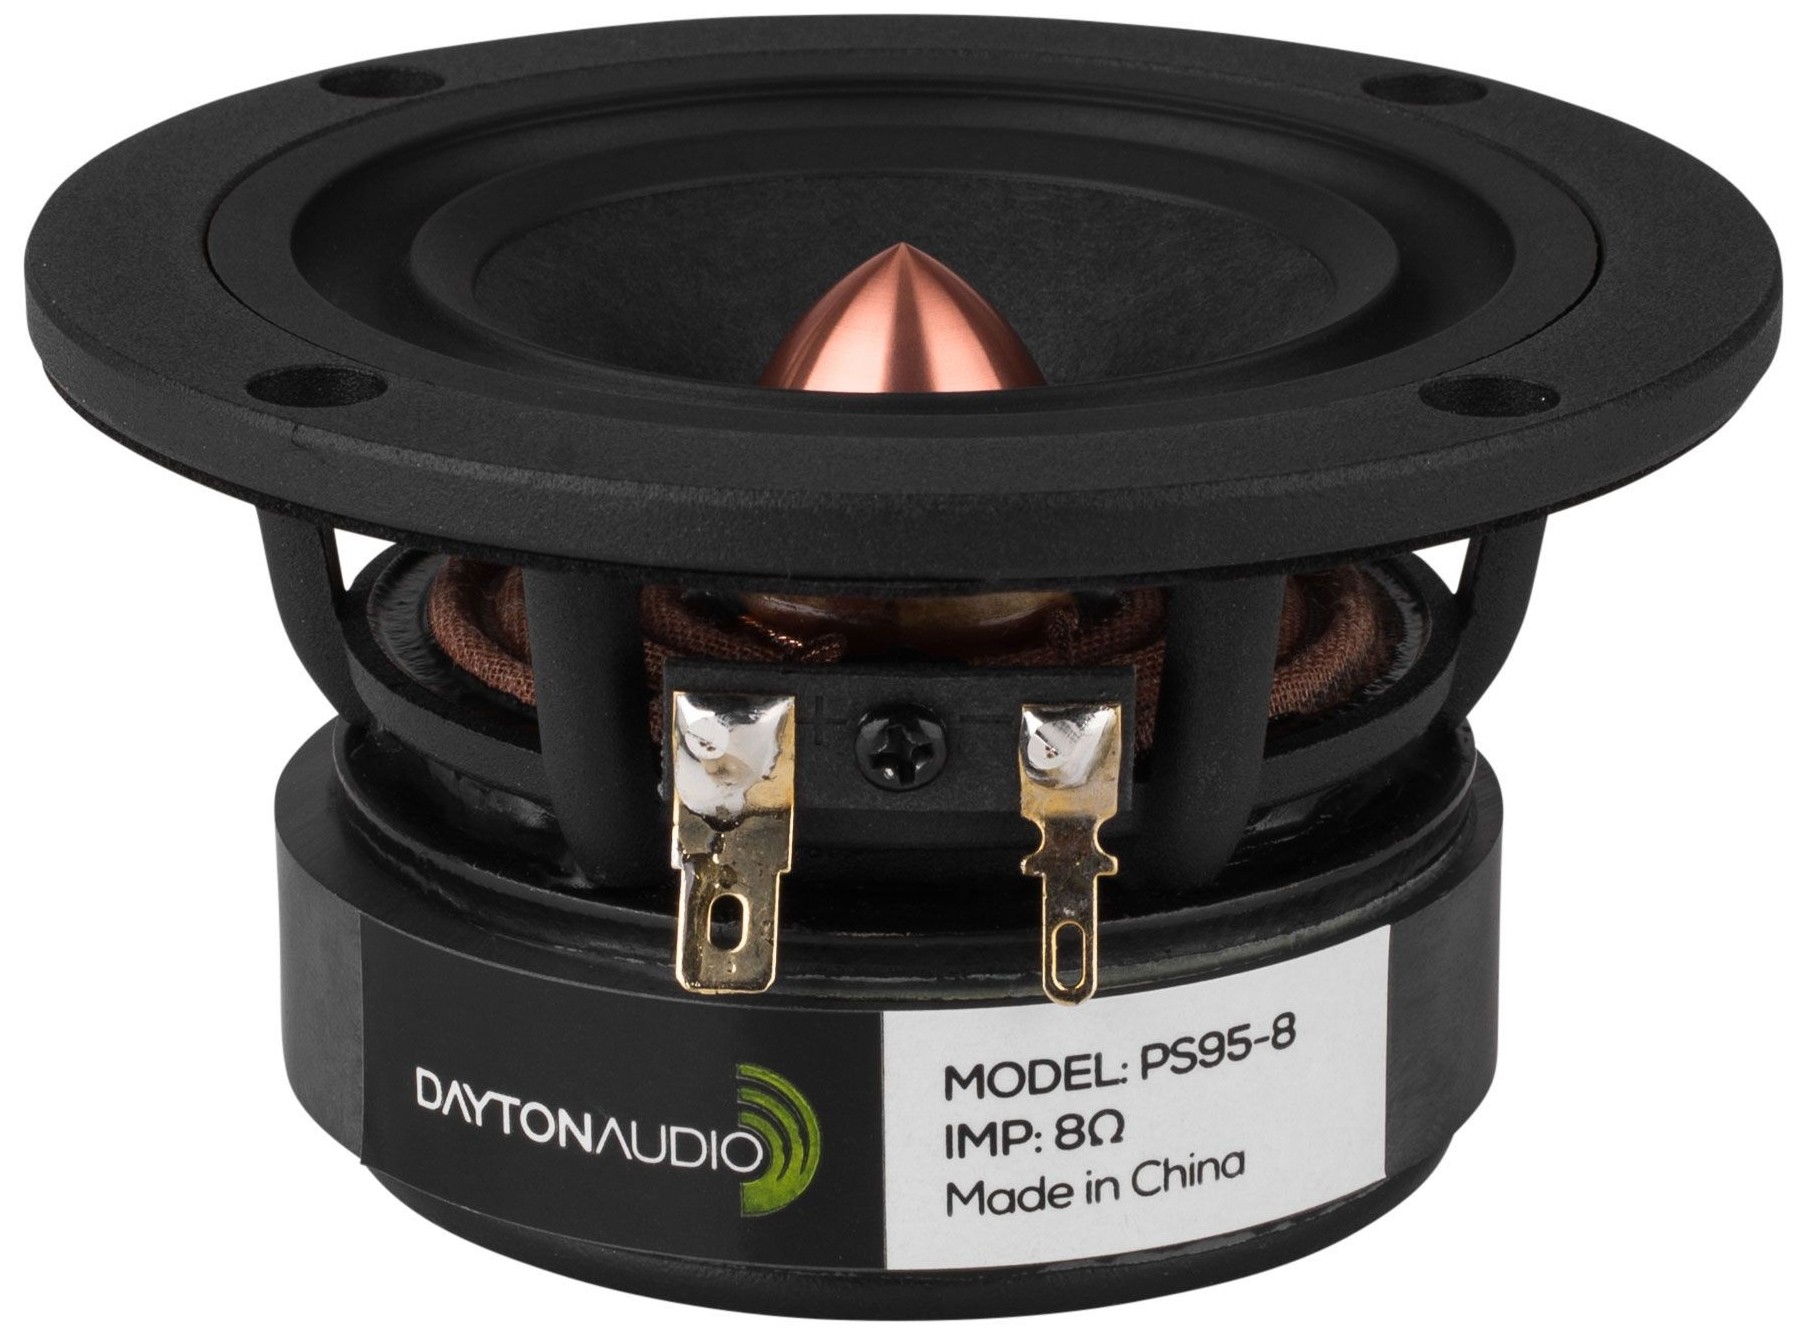 Dayton Audio PS95-8 Full-range